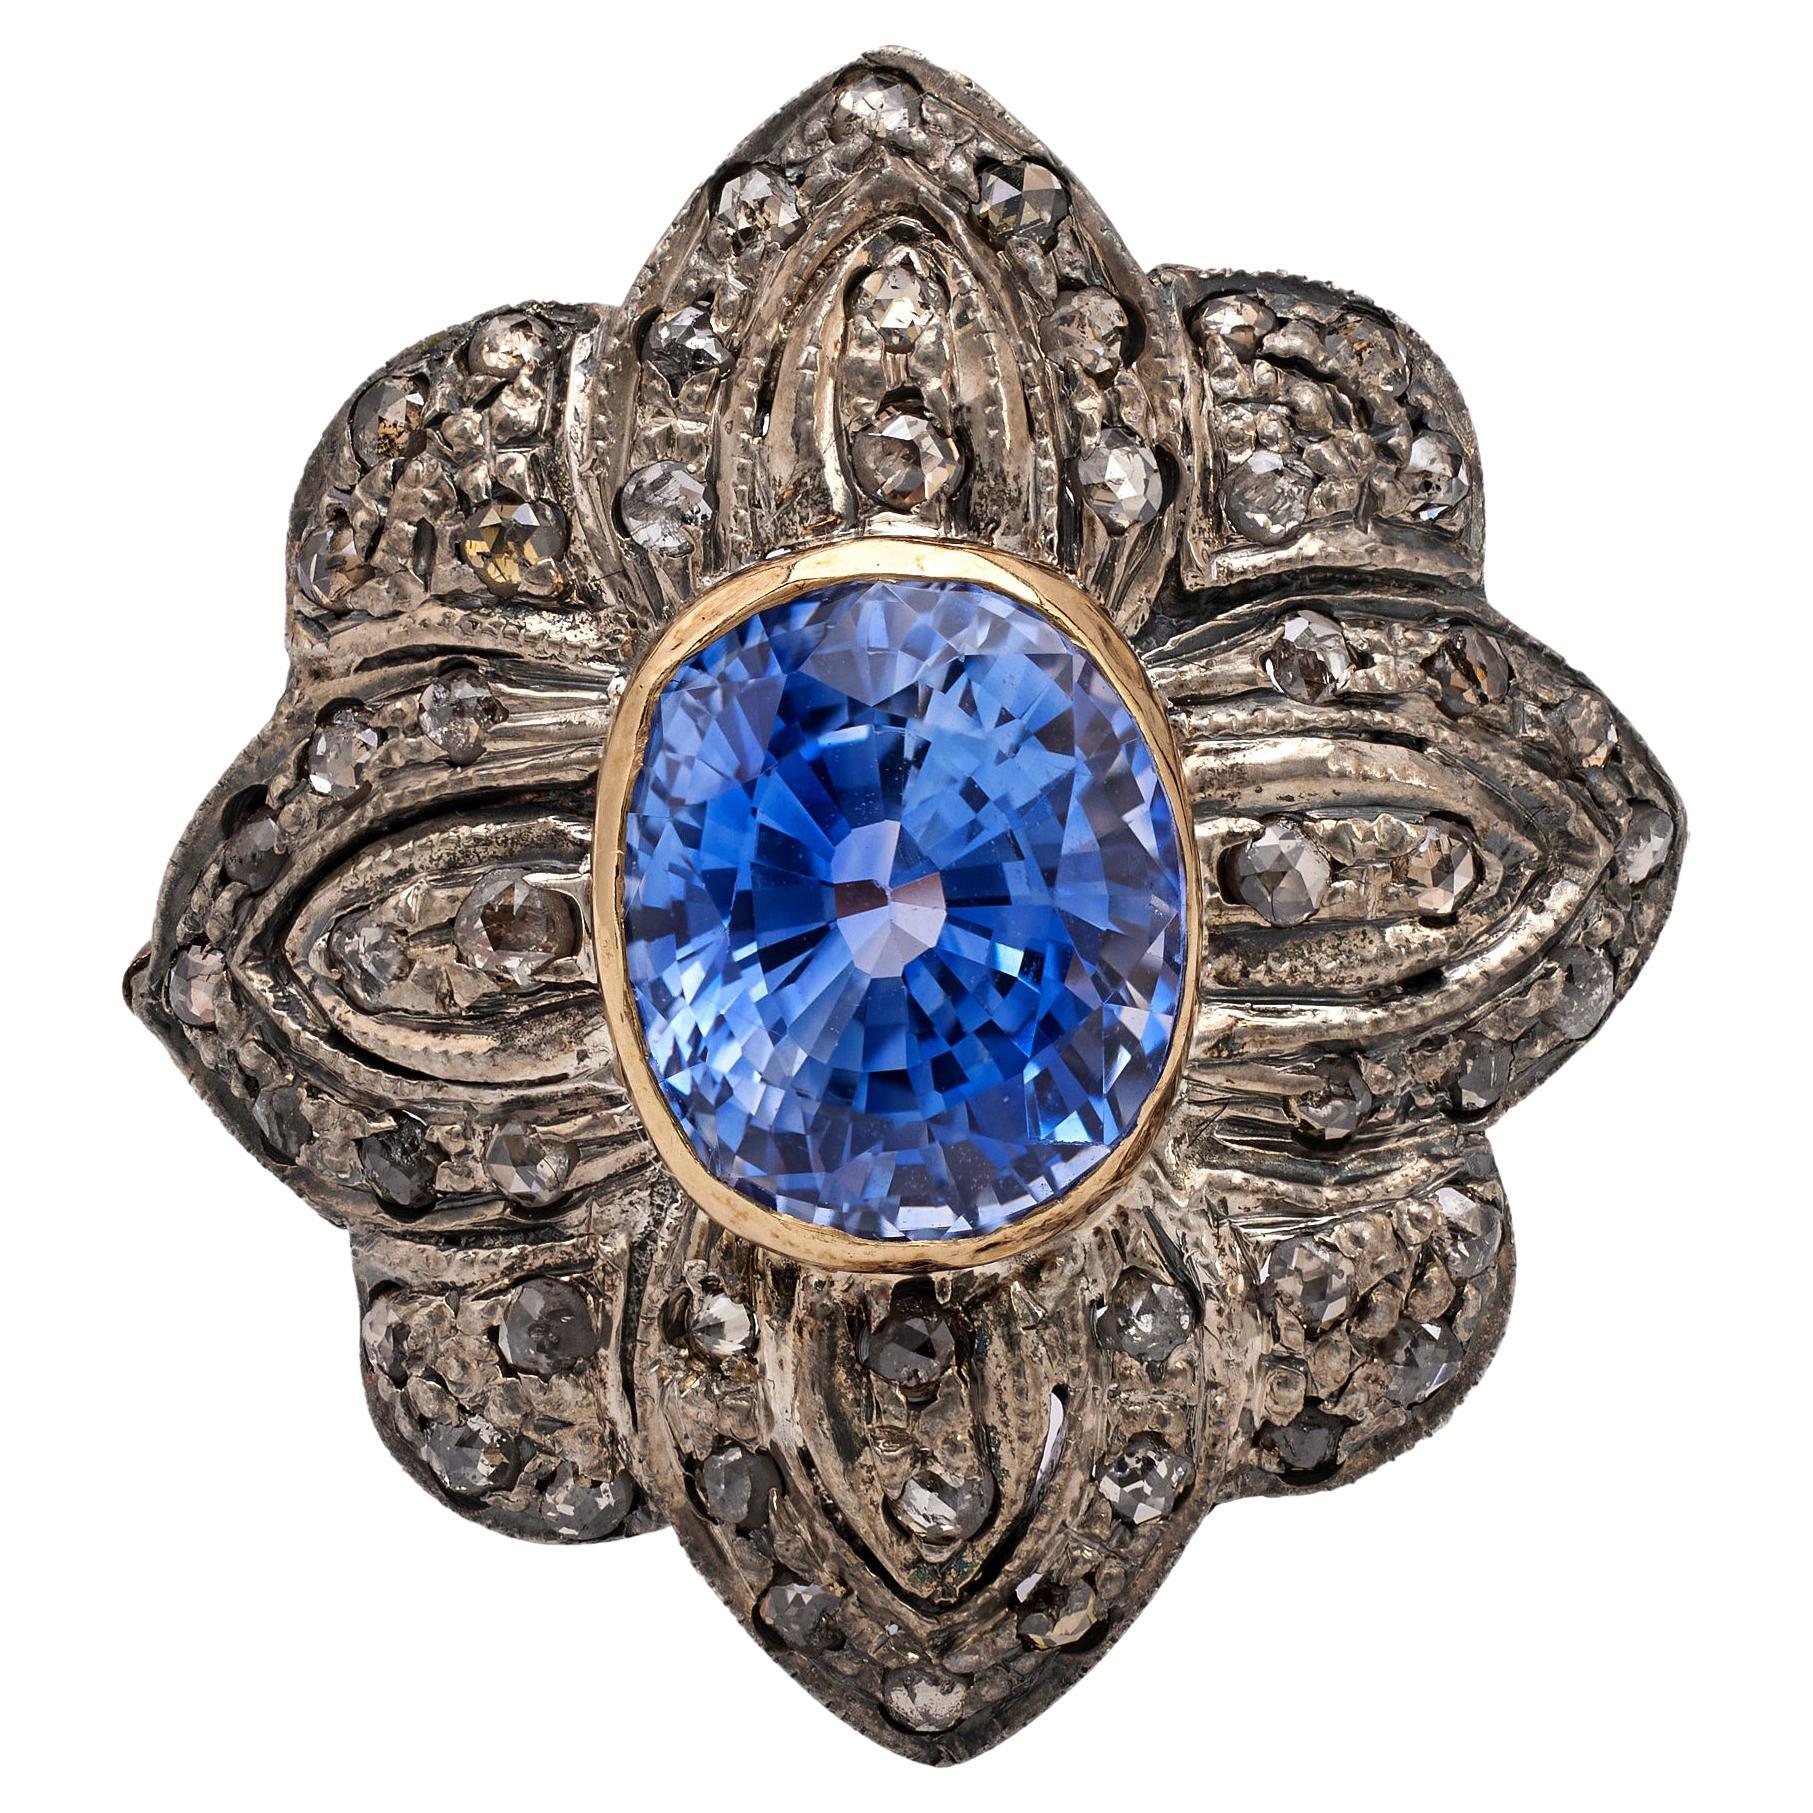 Antique Portuguese Sapphire and Diamond Gold Silver Ring